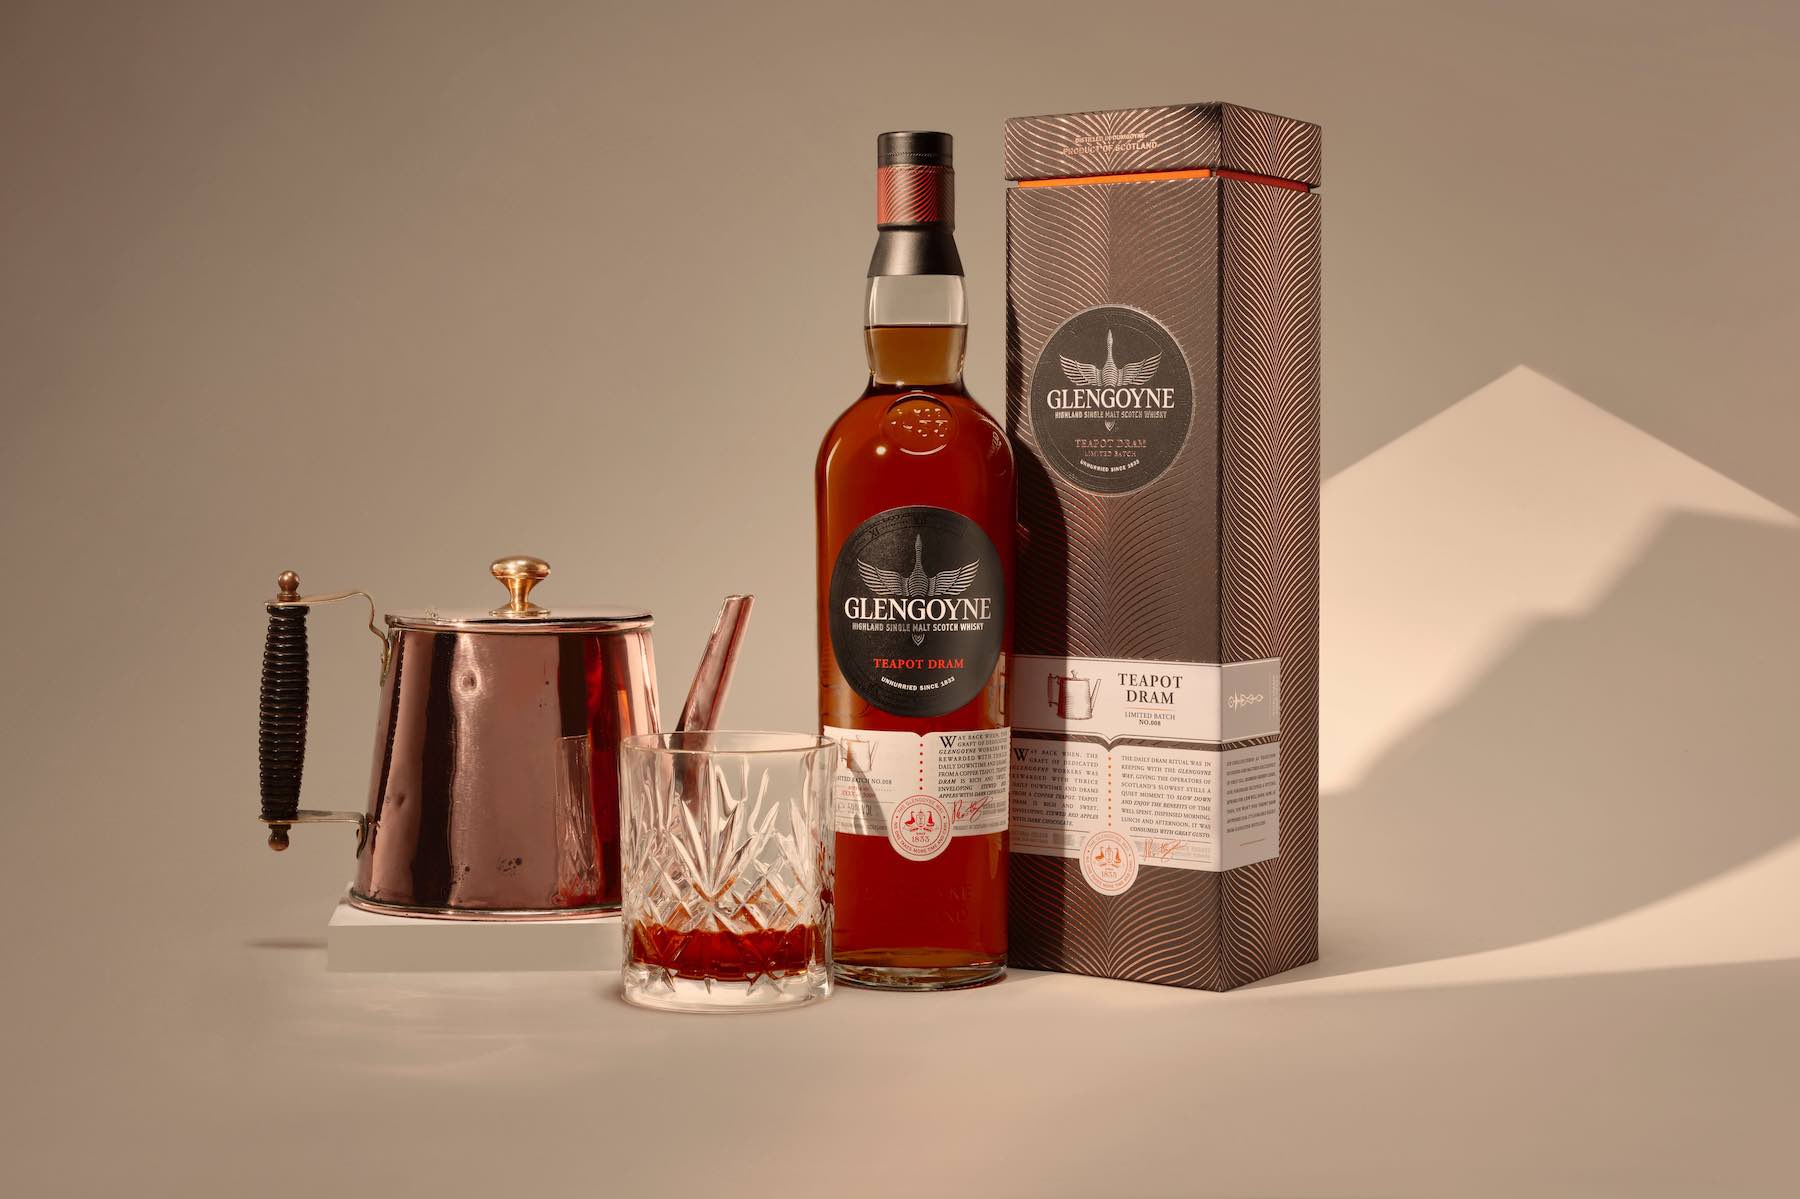 Glengoyne Teapot Dram No. 008 Limited Edition Whisky 2021